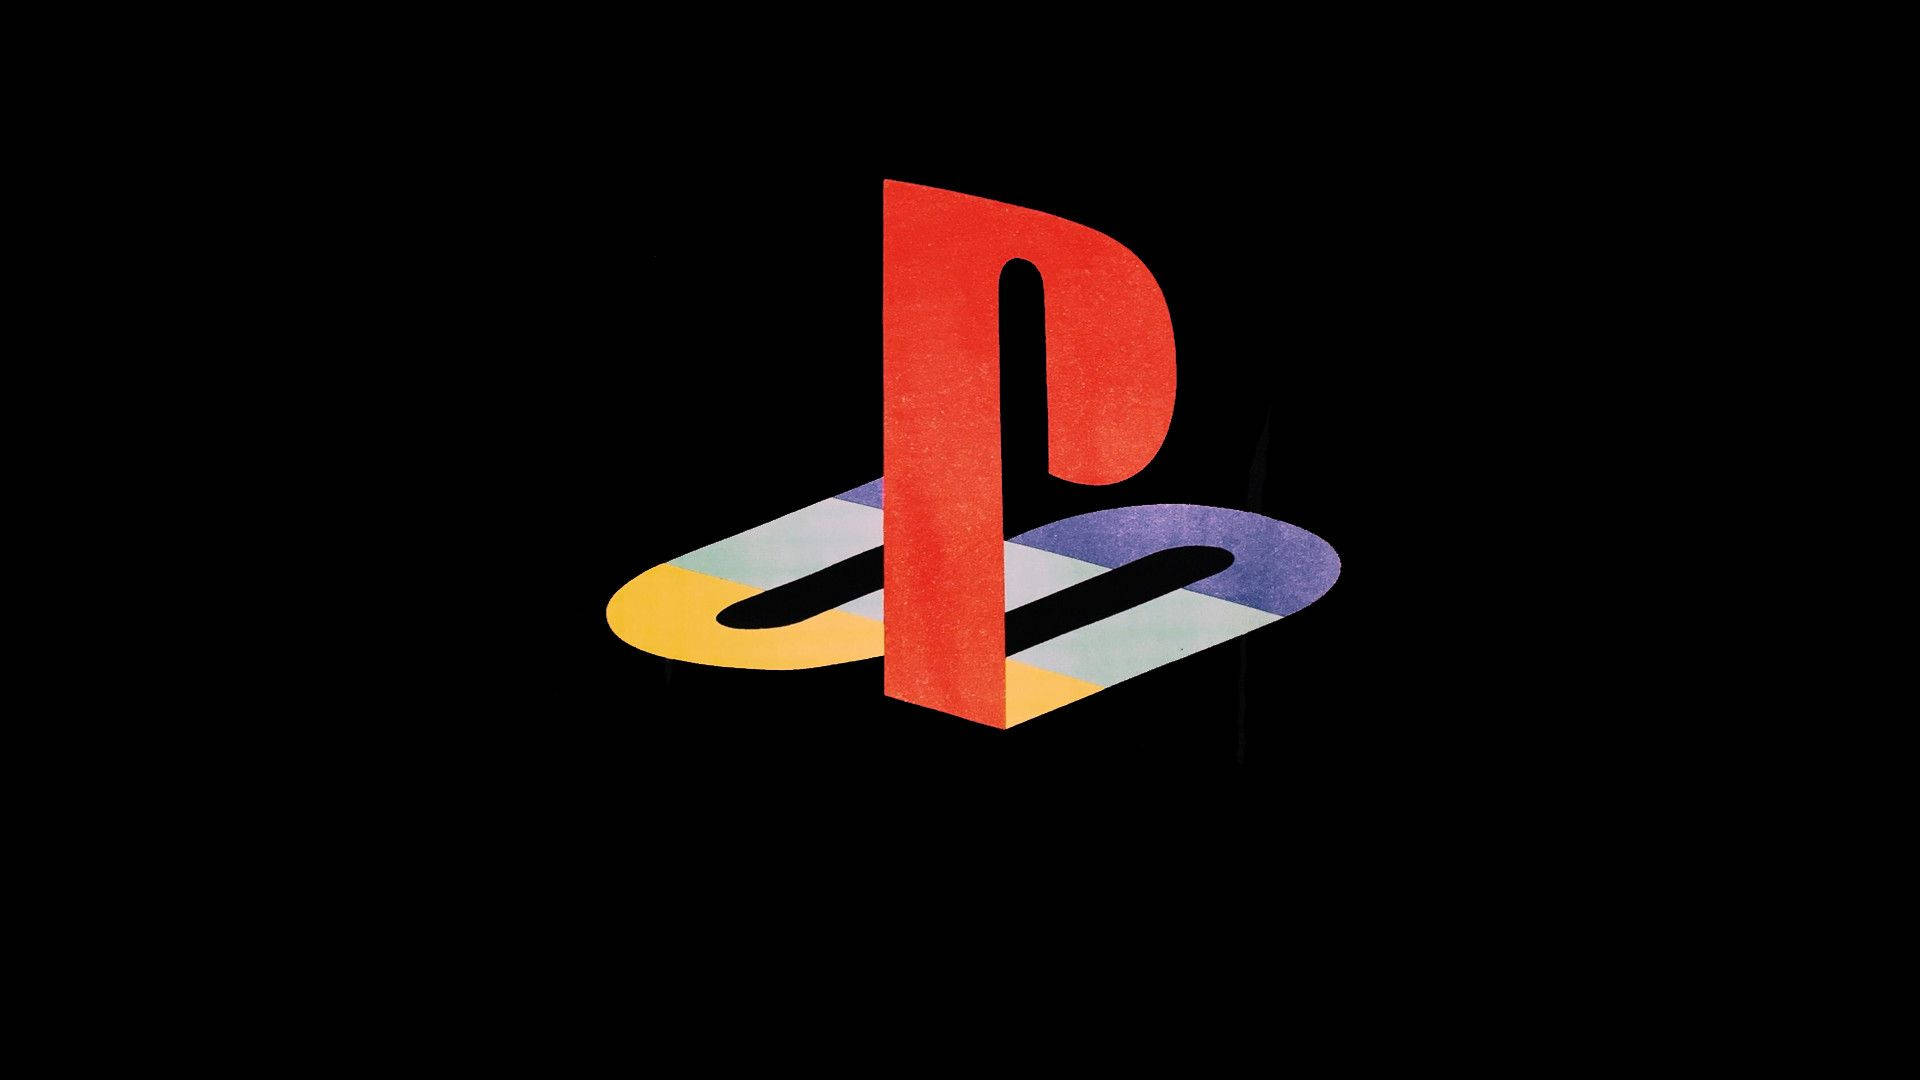 PS4 Logo Black Background Wallpaper